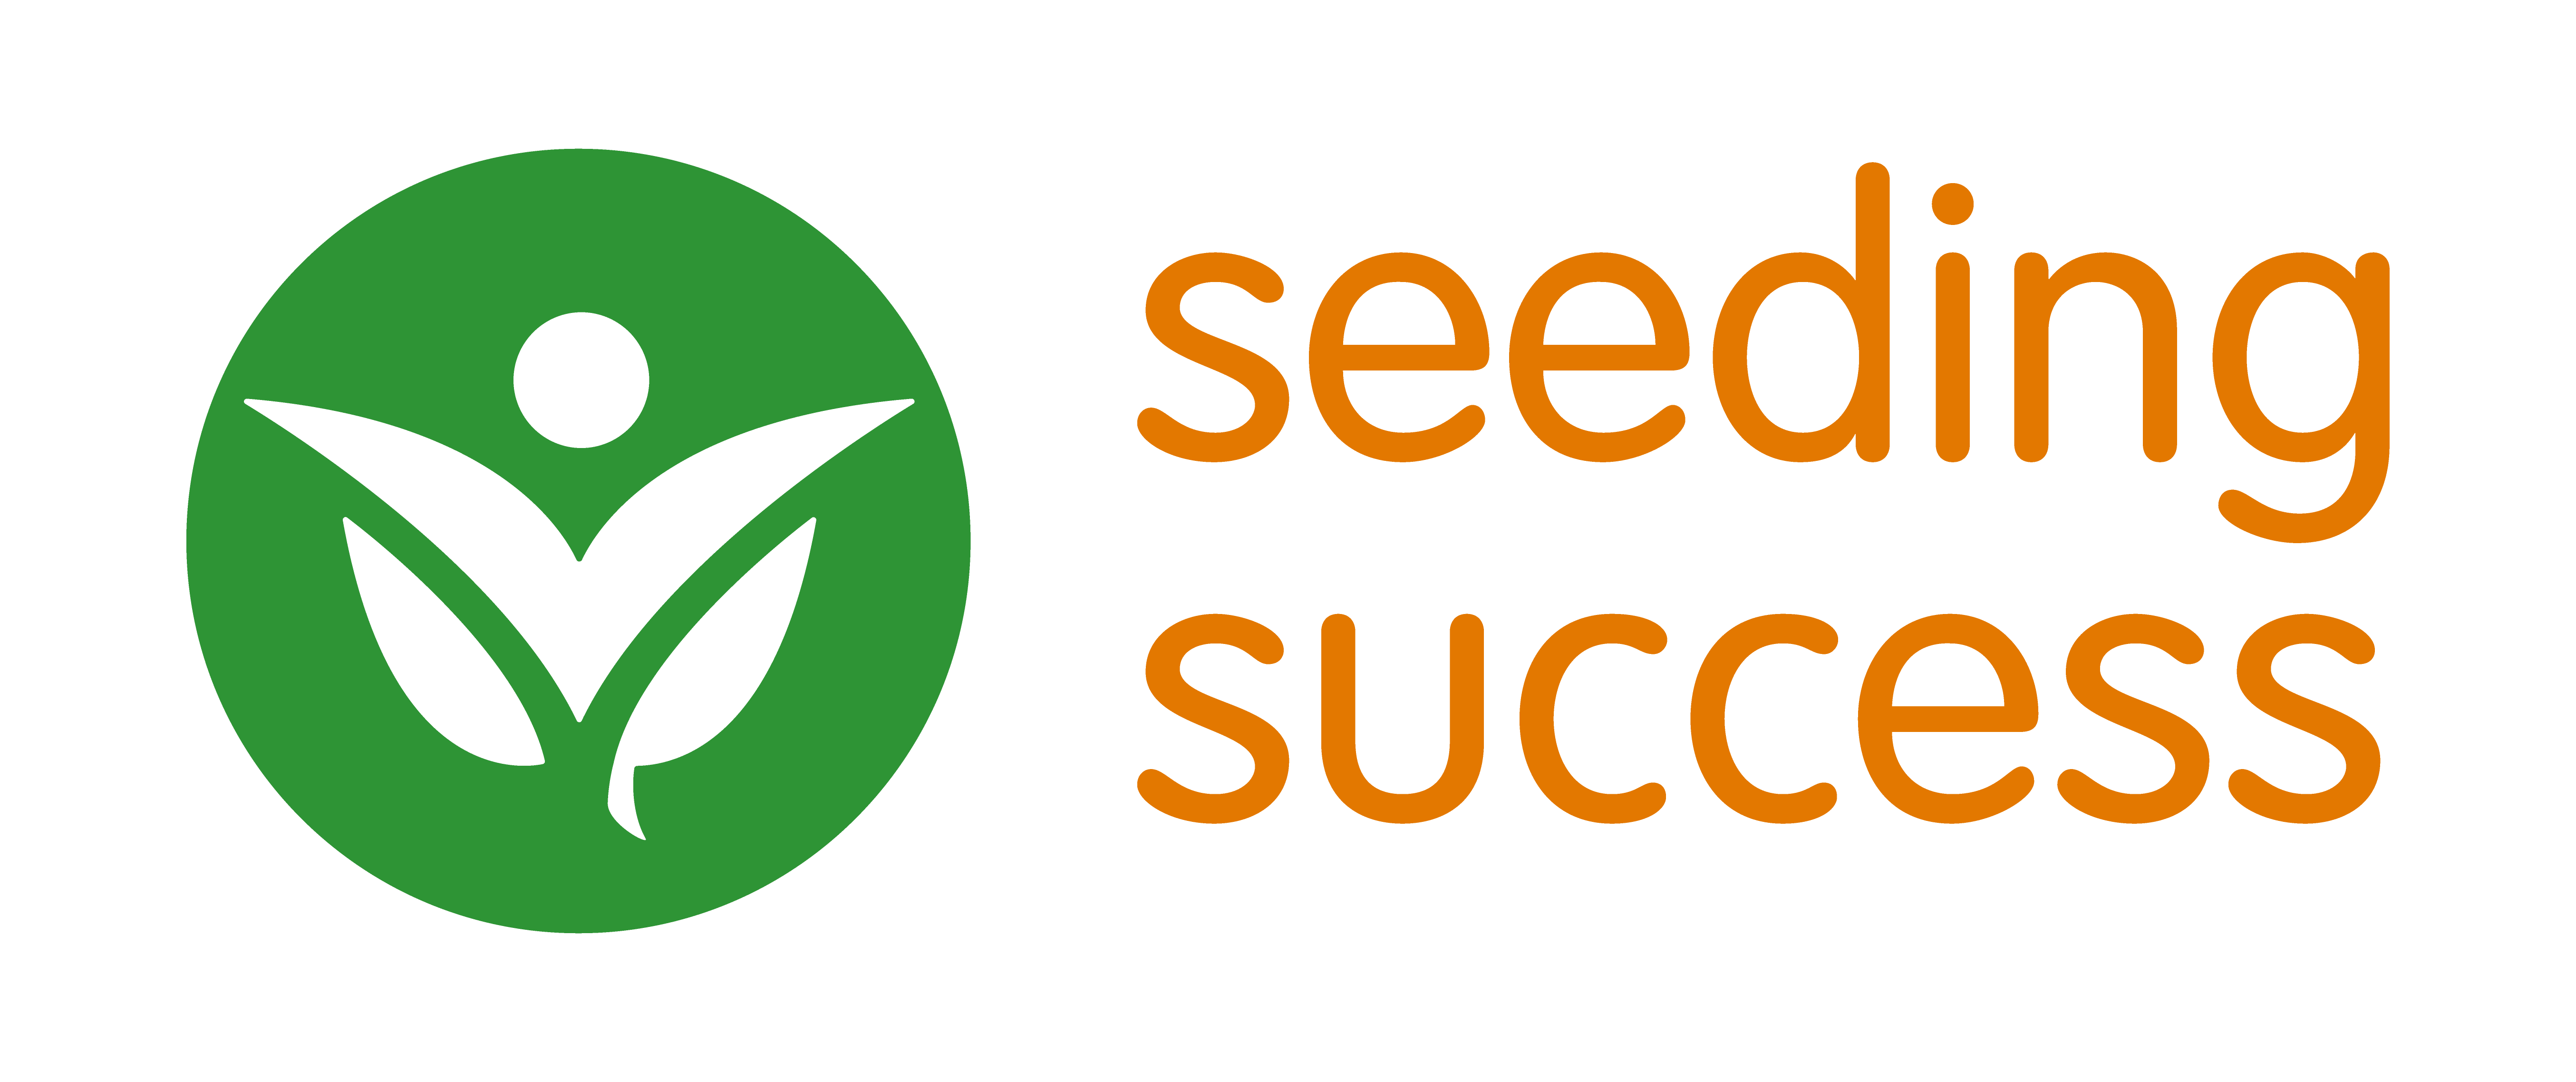 Seeding Success logo